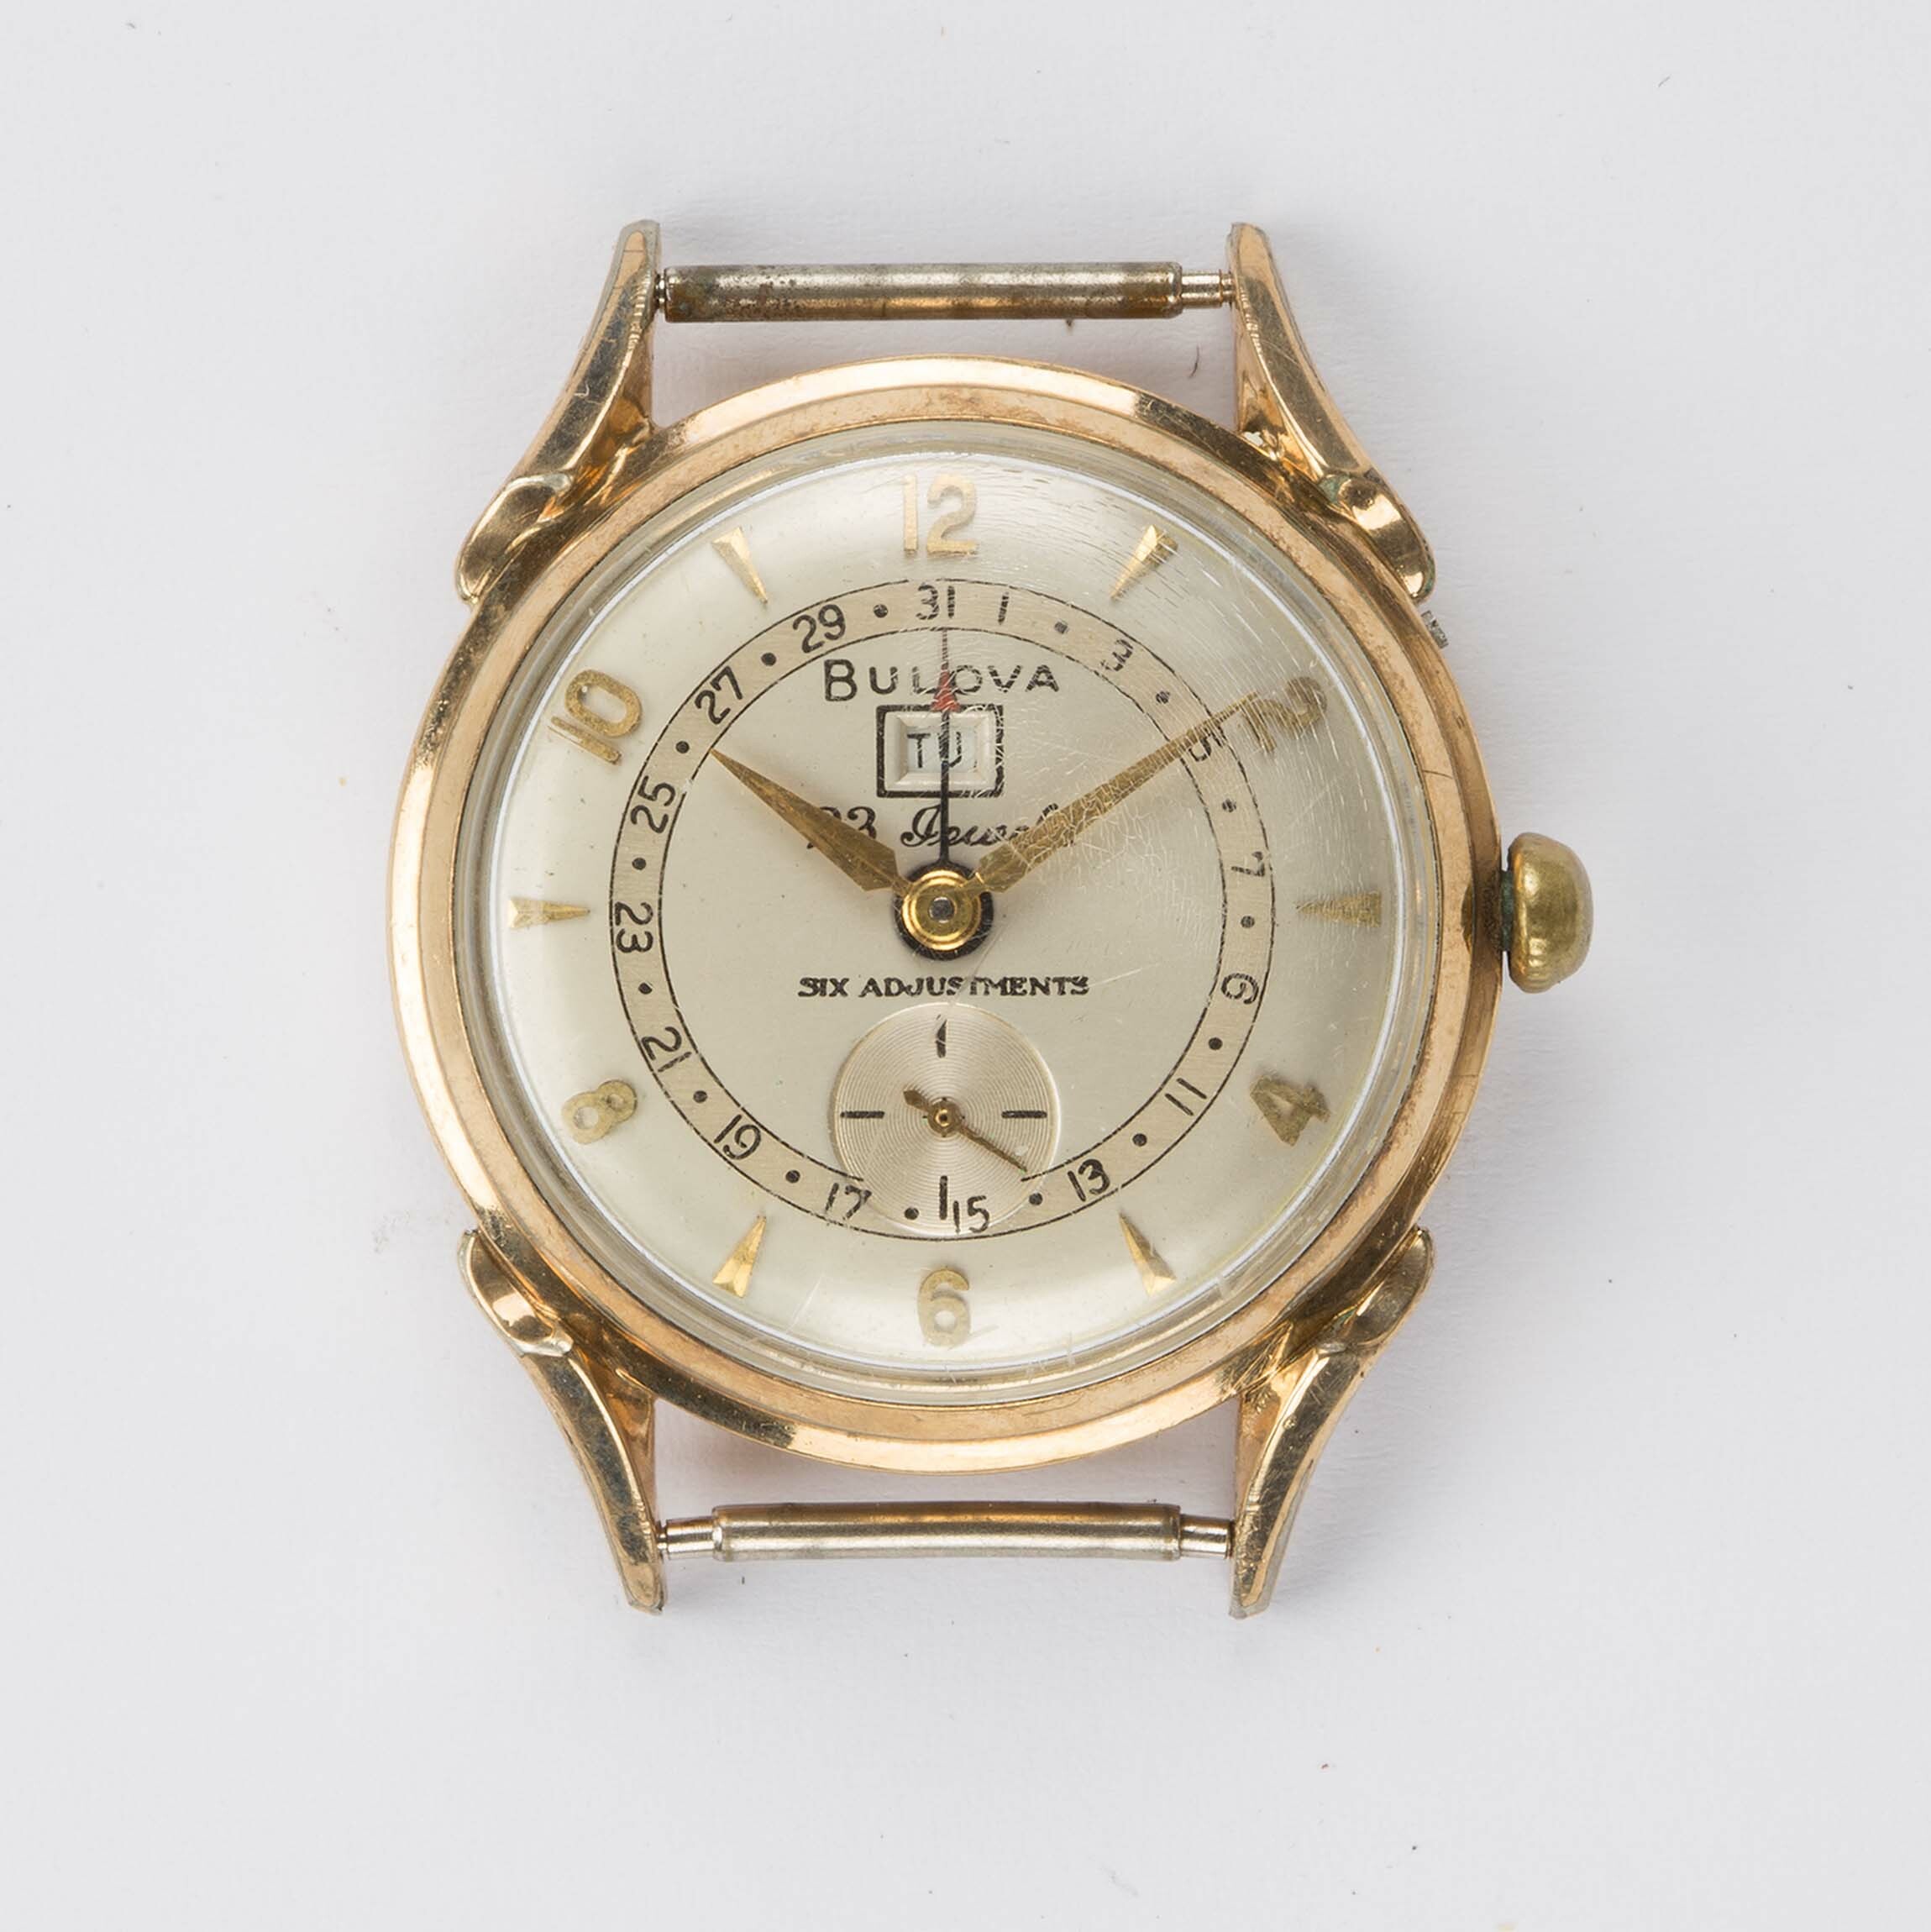 Armbanduhr, Bulova, USA, 1959 (Deutsches Uhrenmuseum CC BY-SA)